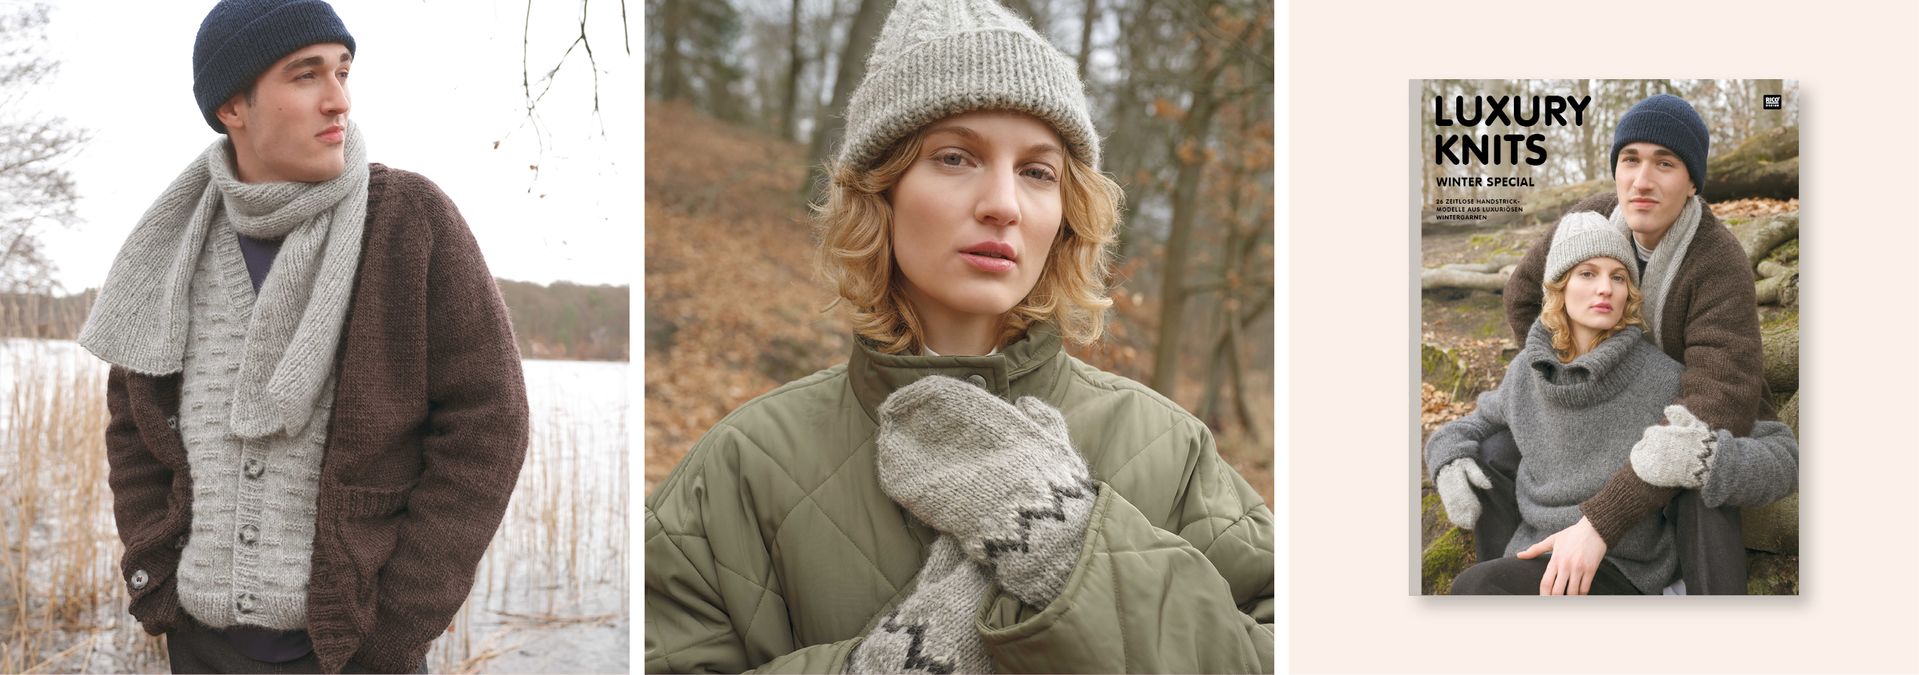 https://www.rico-design.com/rico-design-luxury-knits-winter-special